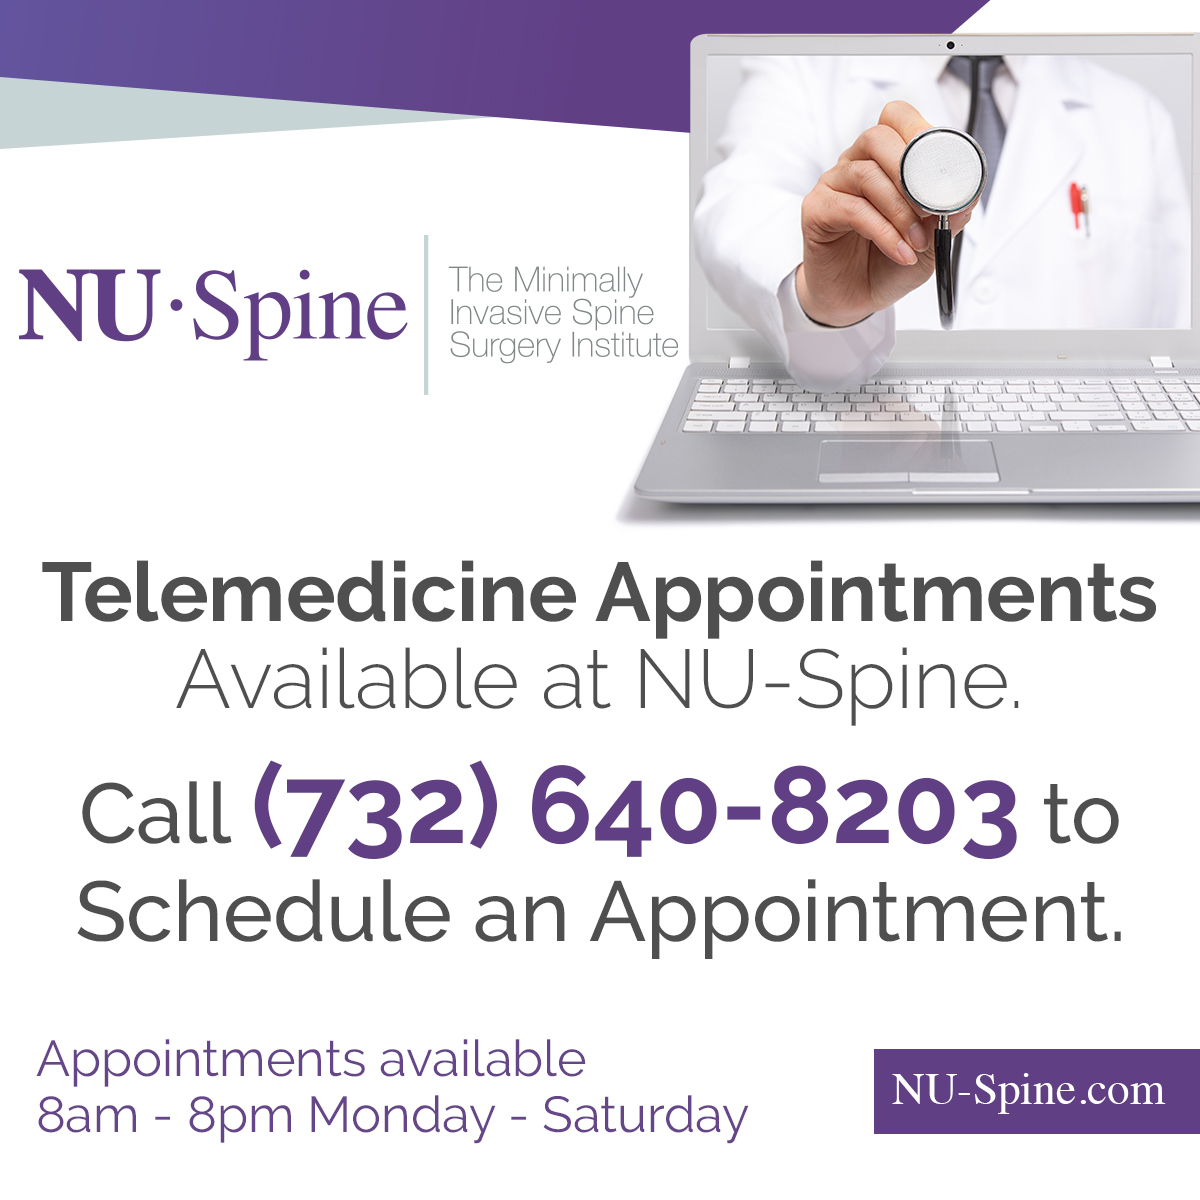 NU-Spine: The Minimally Invasive Spine Surgery Institute